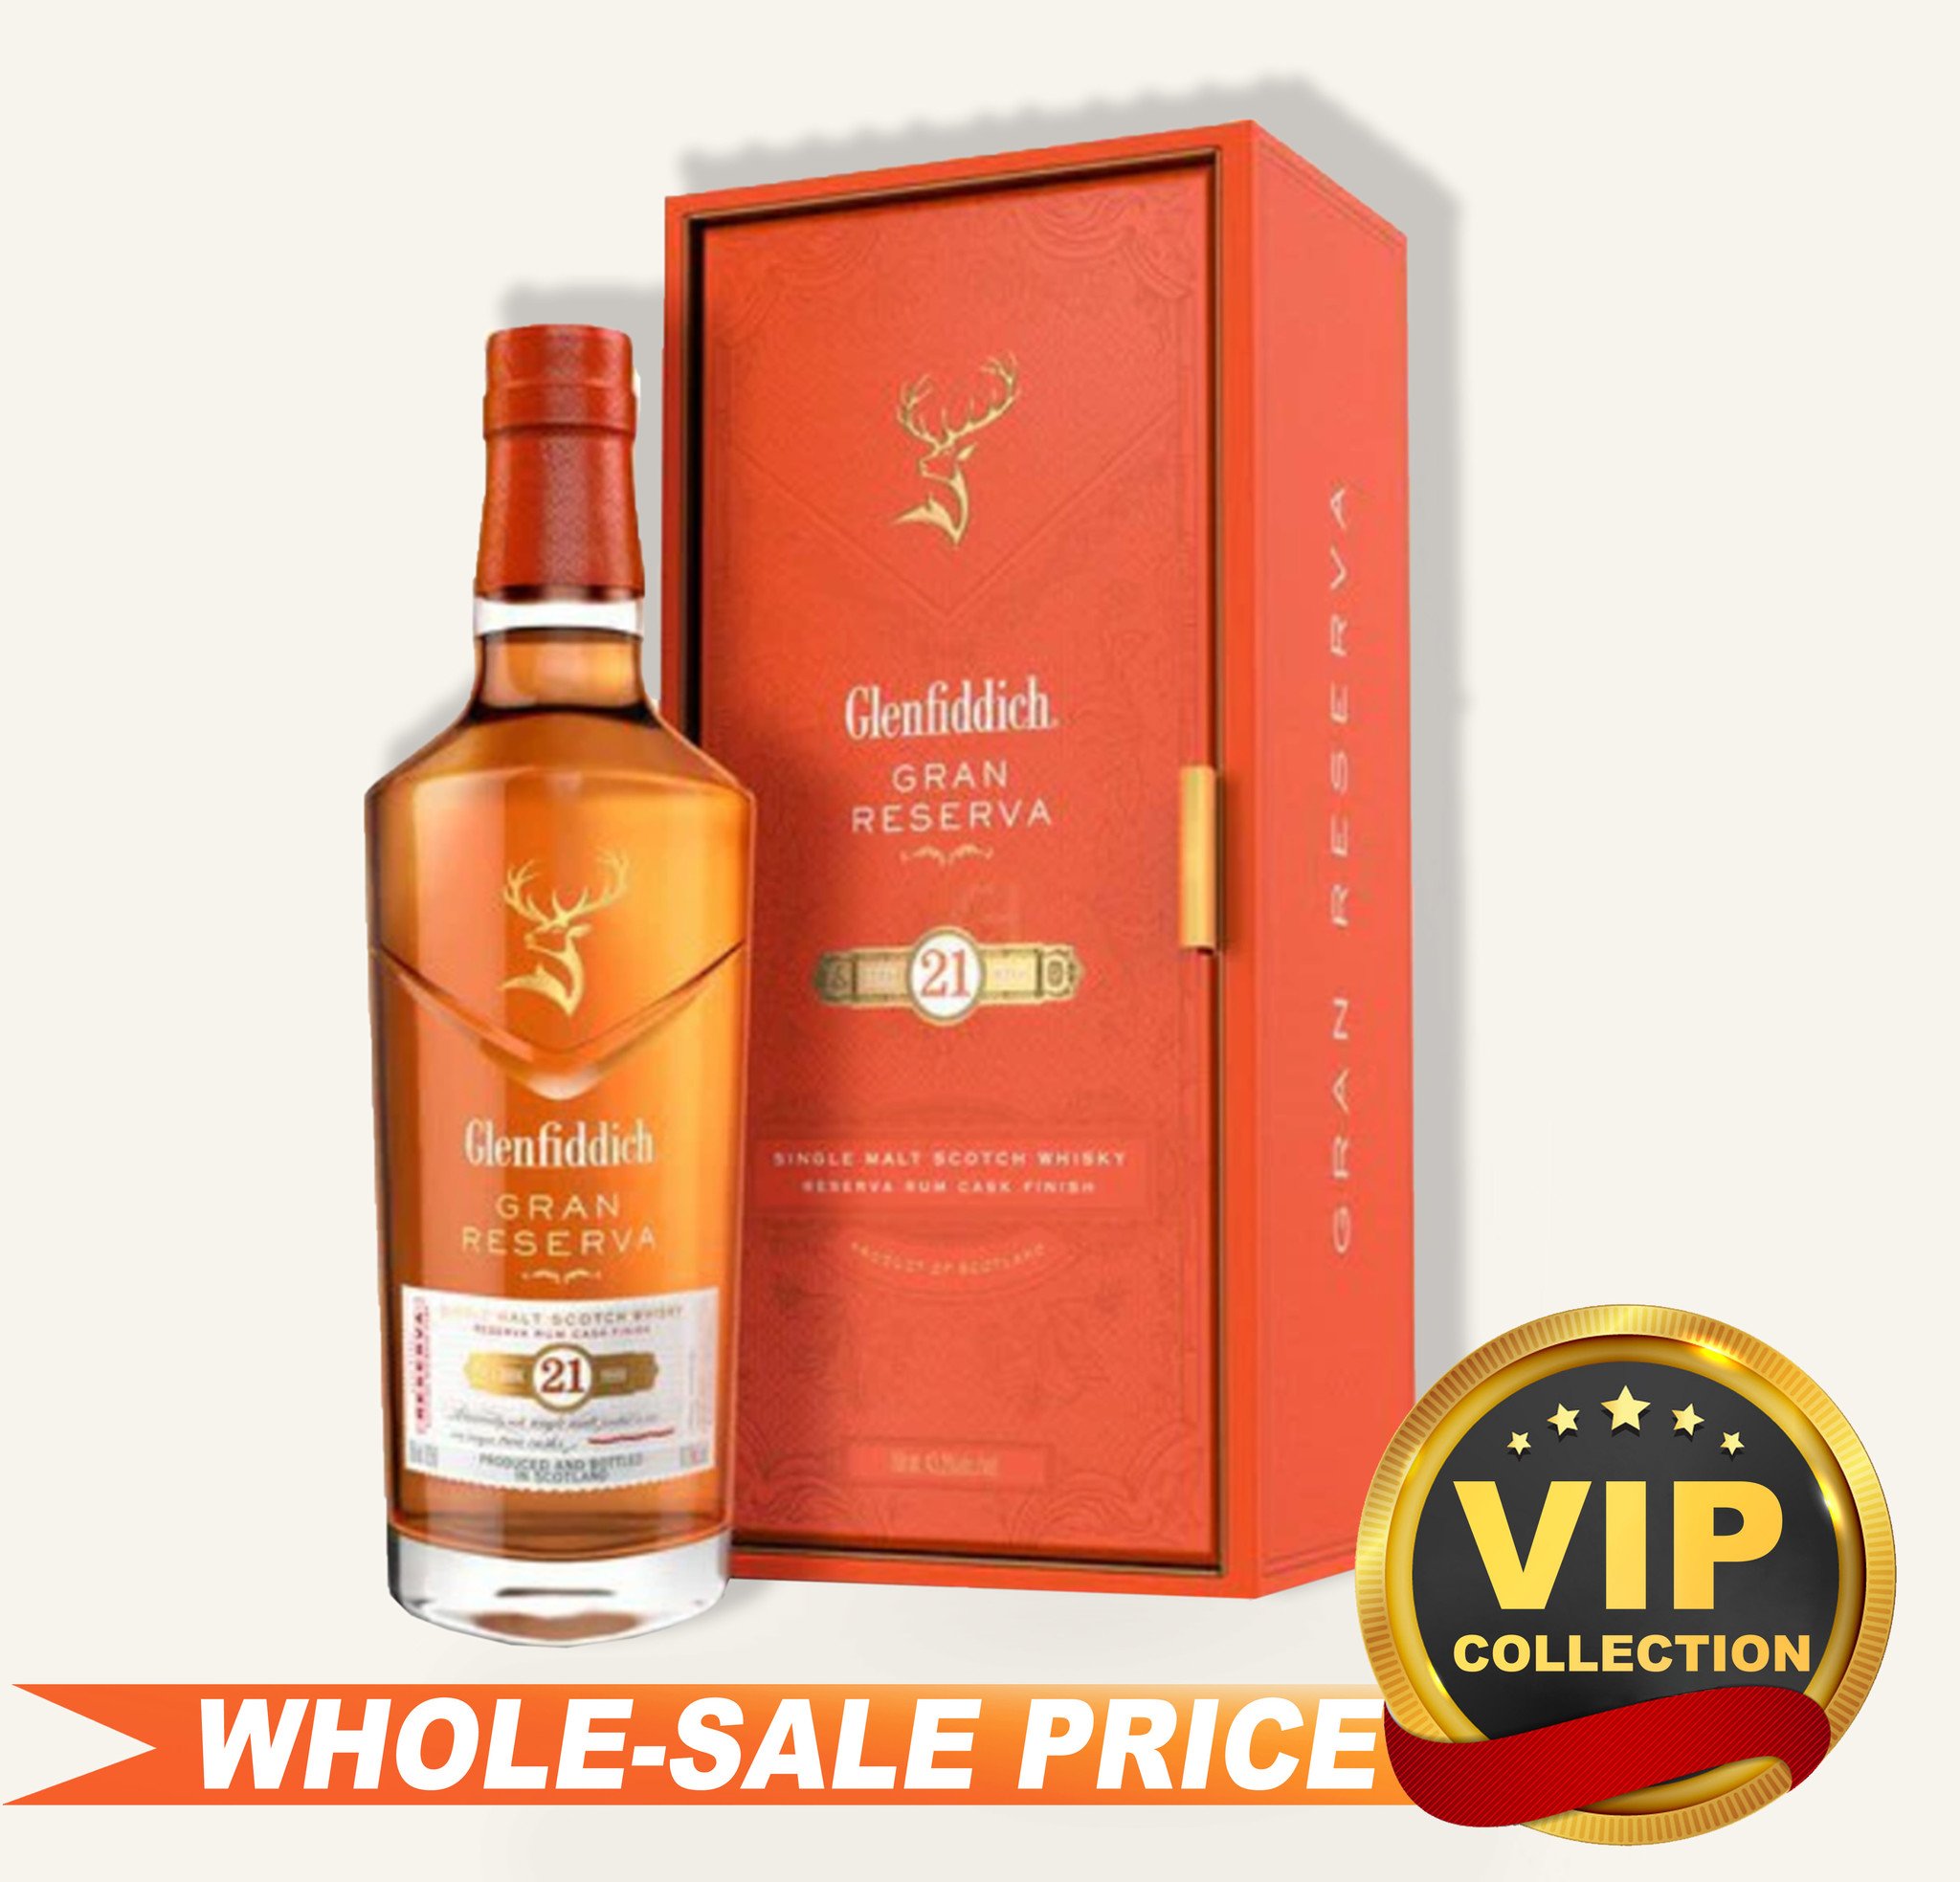 Product Detail  Glenfiddich 21 Year Old Gran Reserva Rum Cask Finish  Single Malt Scotch Whisky